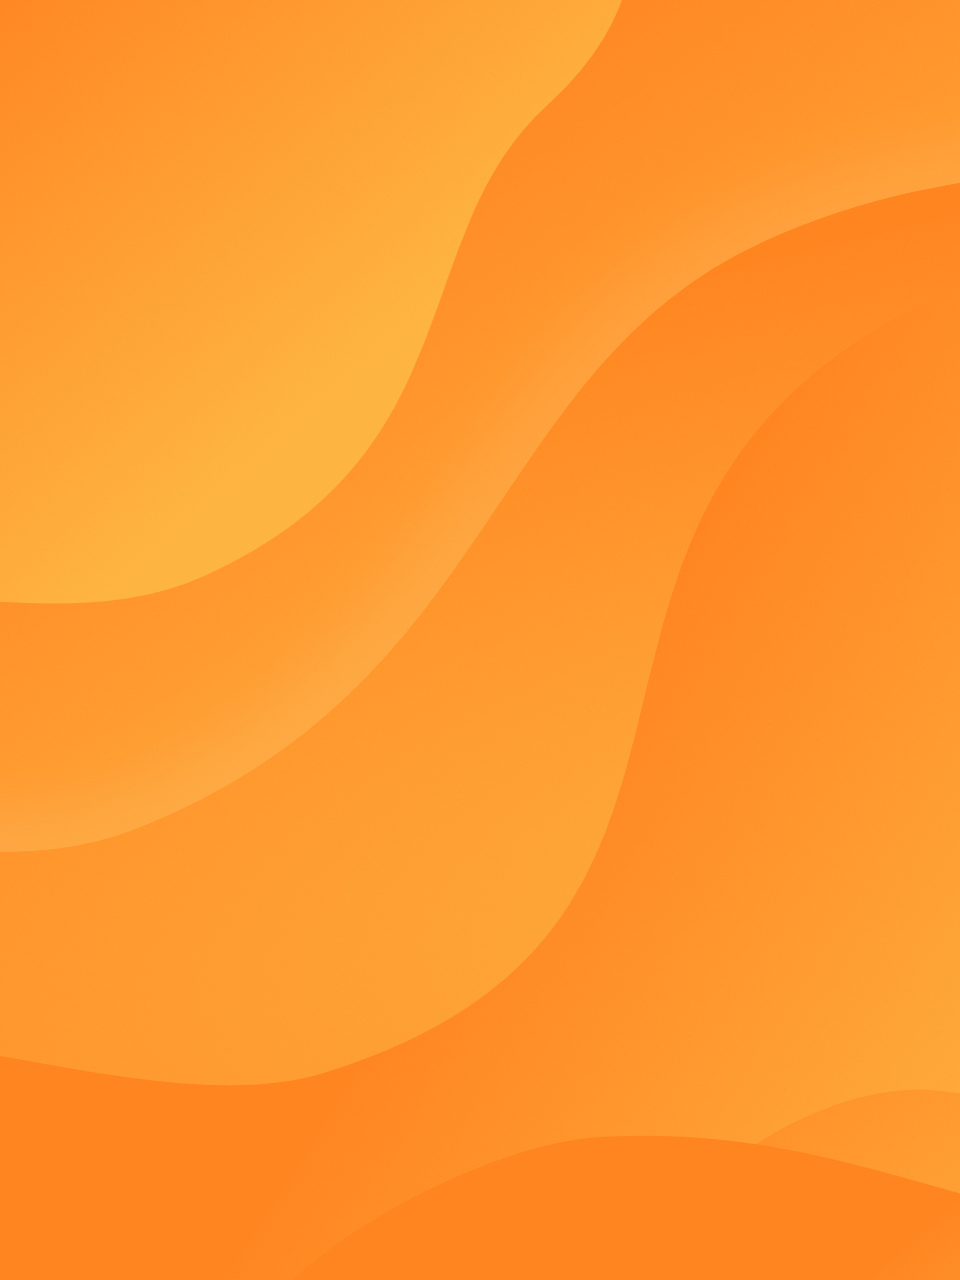 Background Design Orange